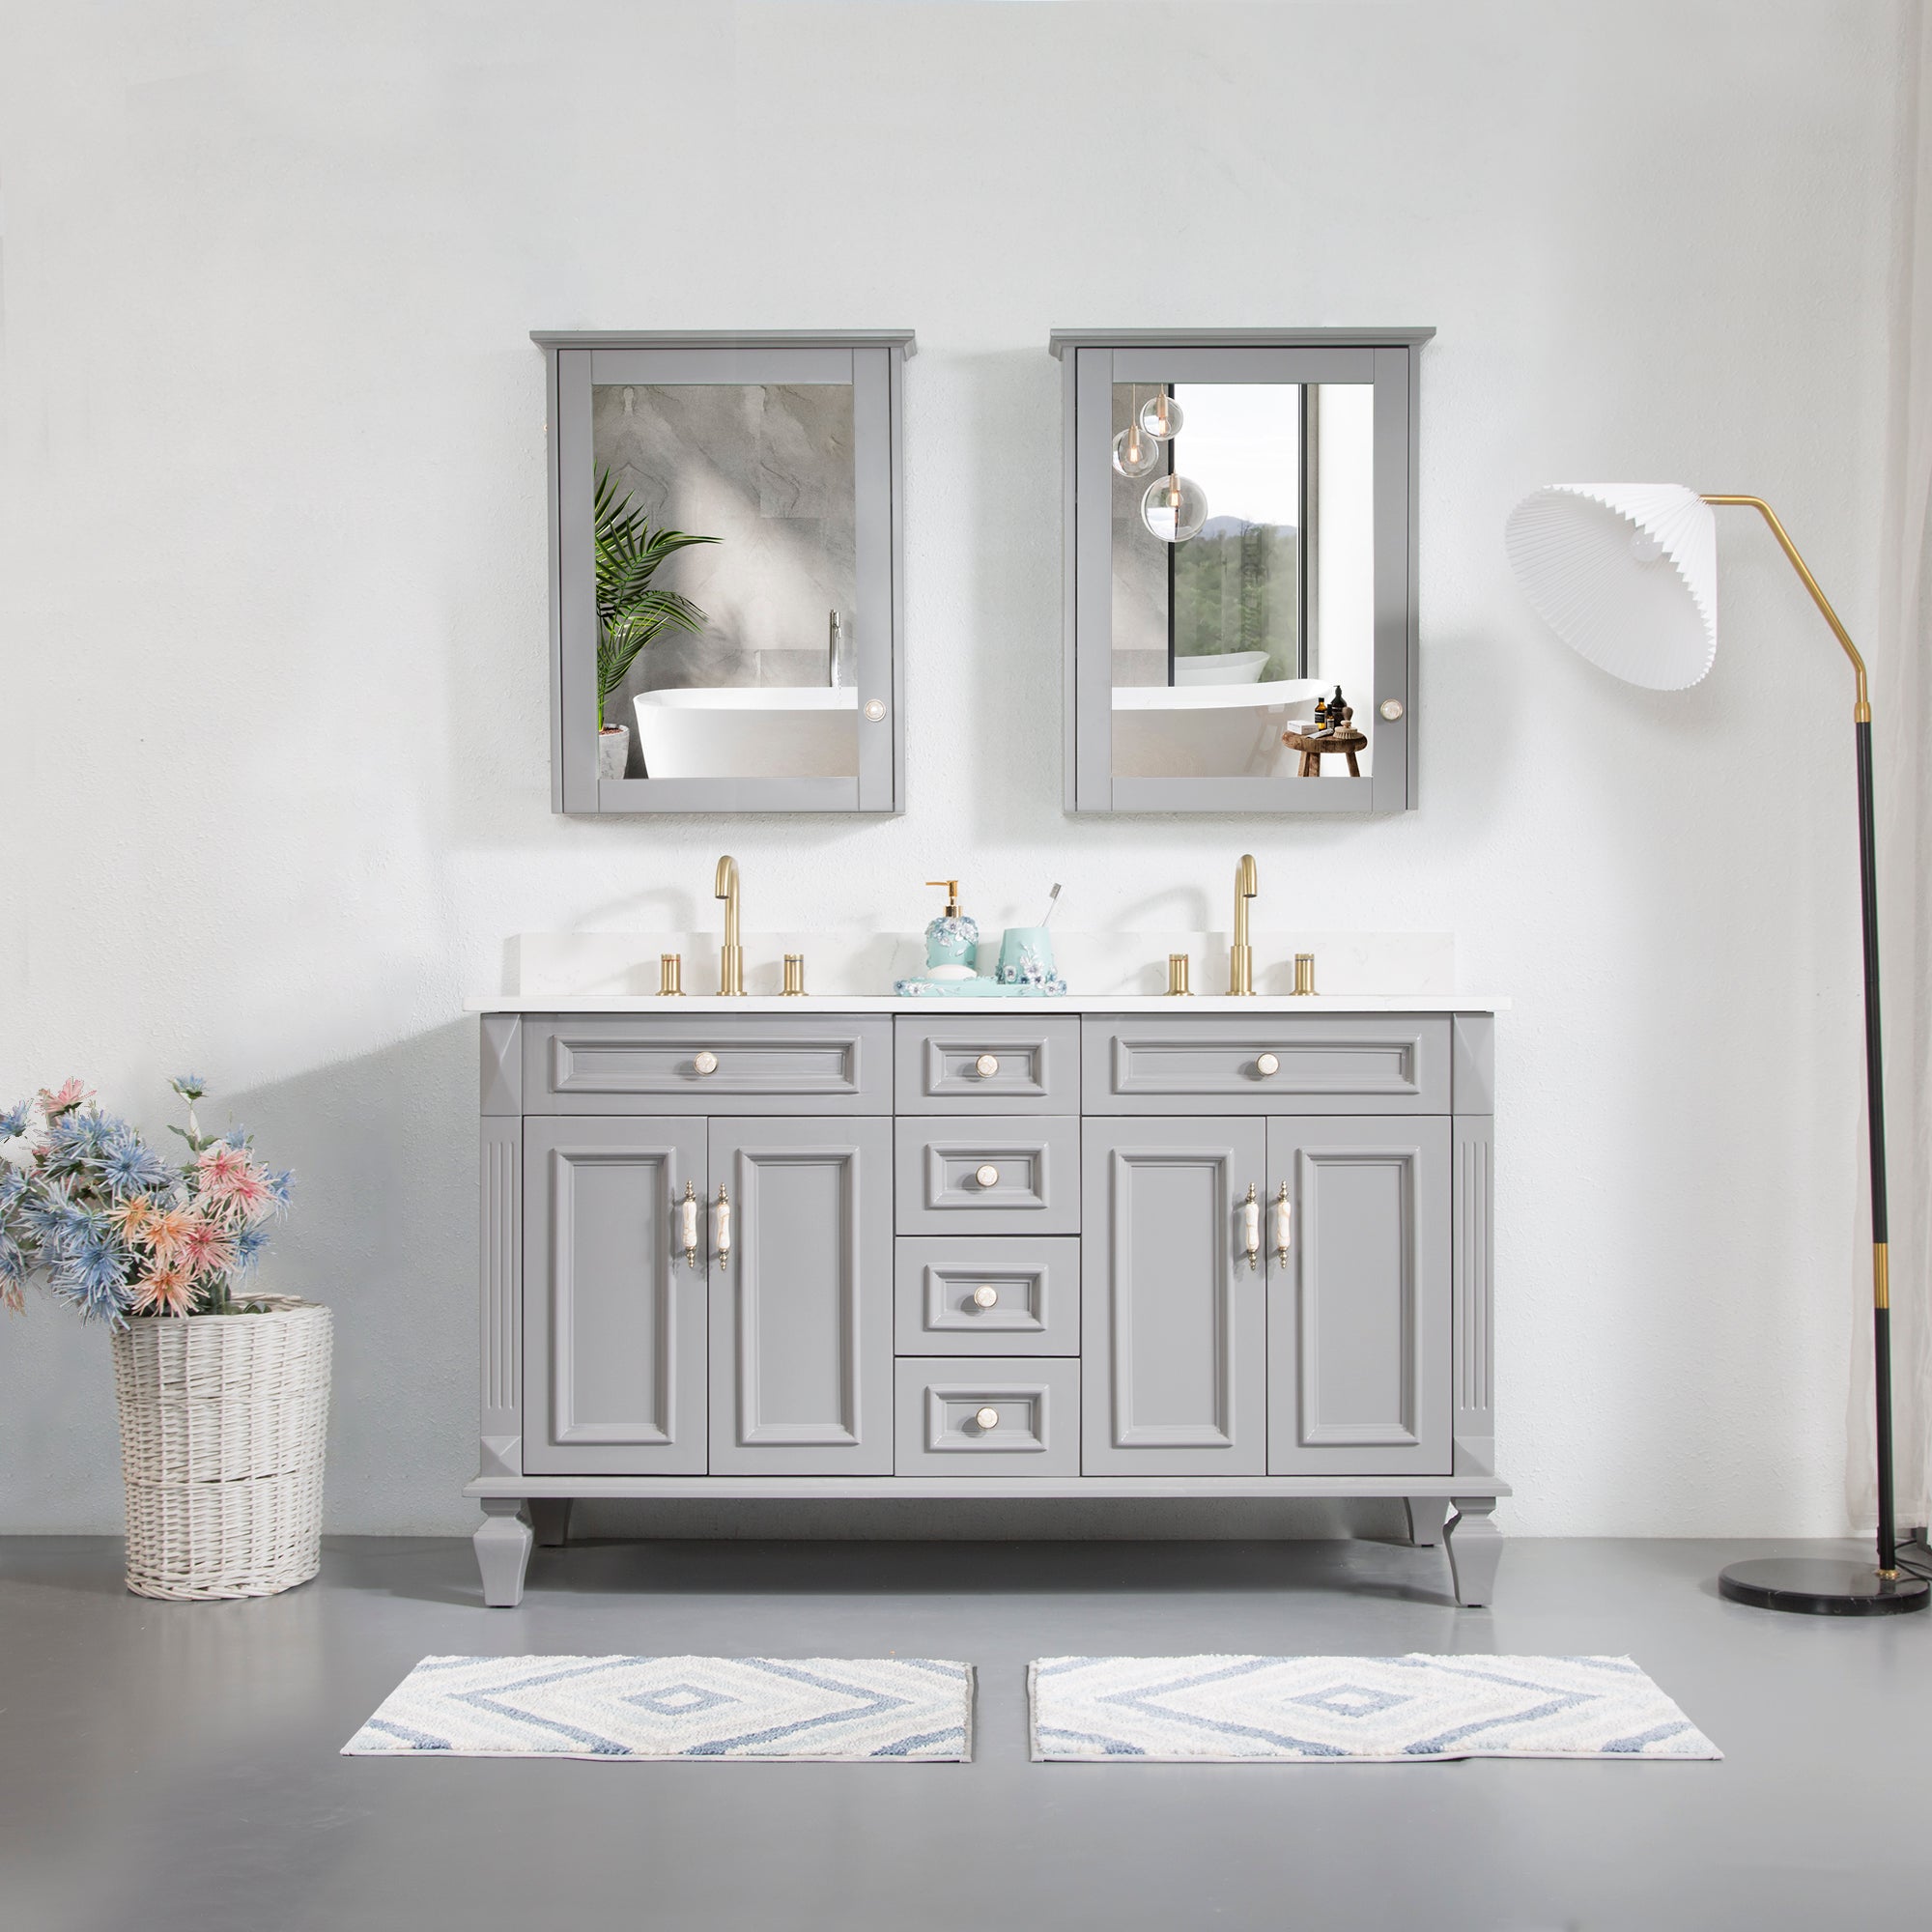 60 in. Titanium Grey Freestanding Solid Wood Bathroom Vanity Storage Organizer with Carrara White Quartz Countertop